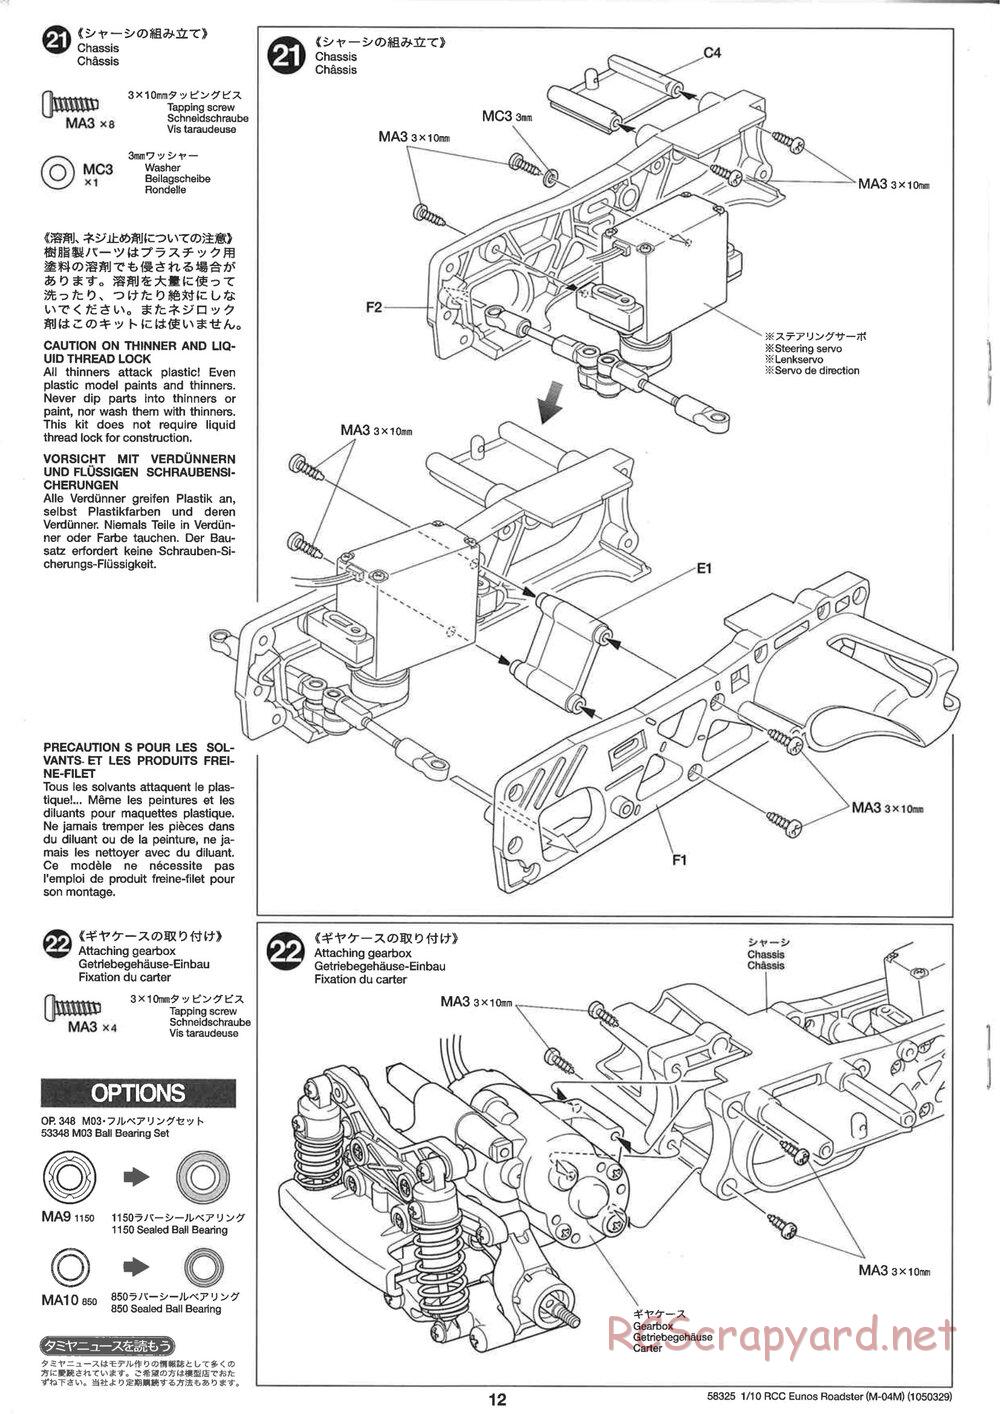 Tamiya - Eunos Roadster - M04M Chassis - Manual - Page 12